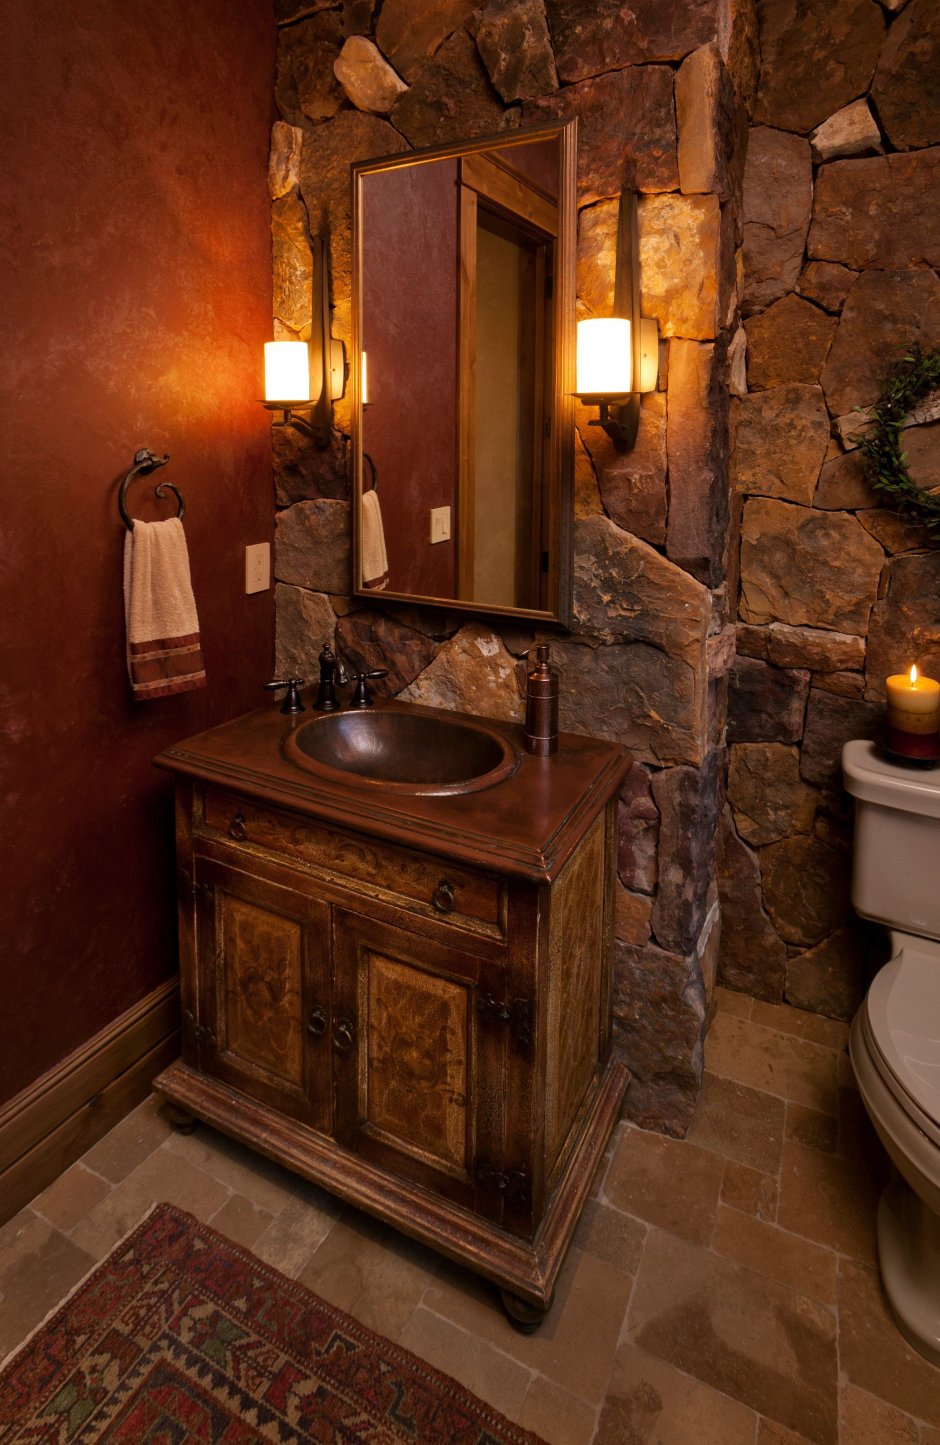 Ванная комната в замковом стиле